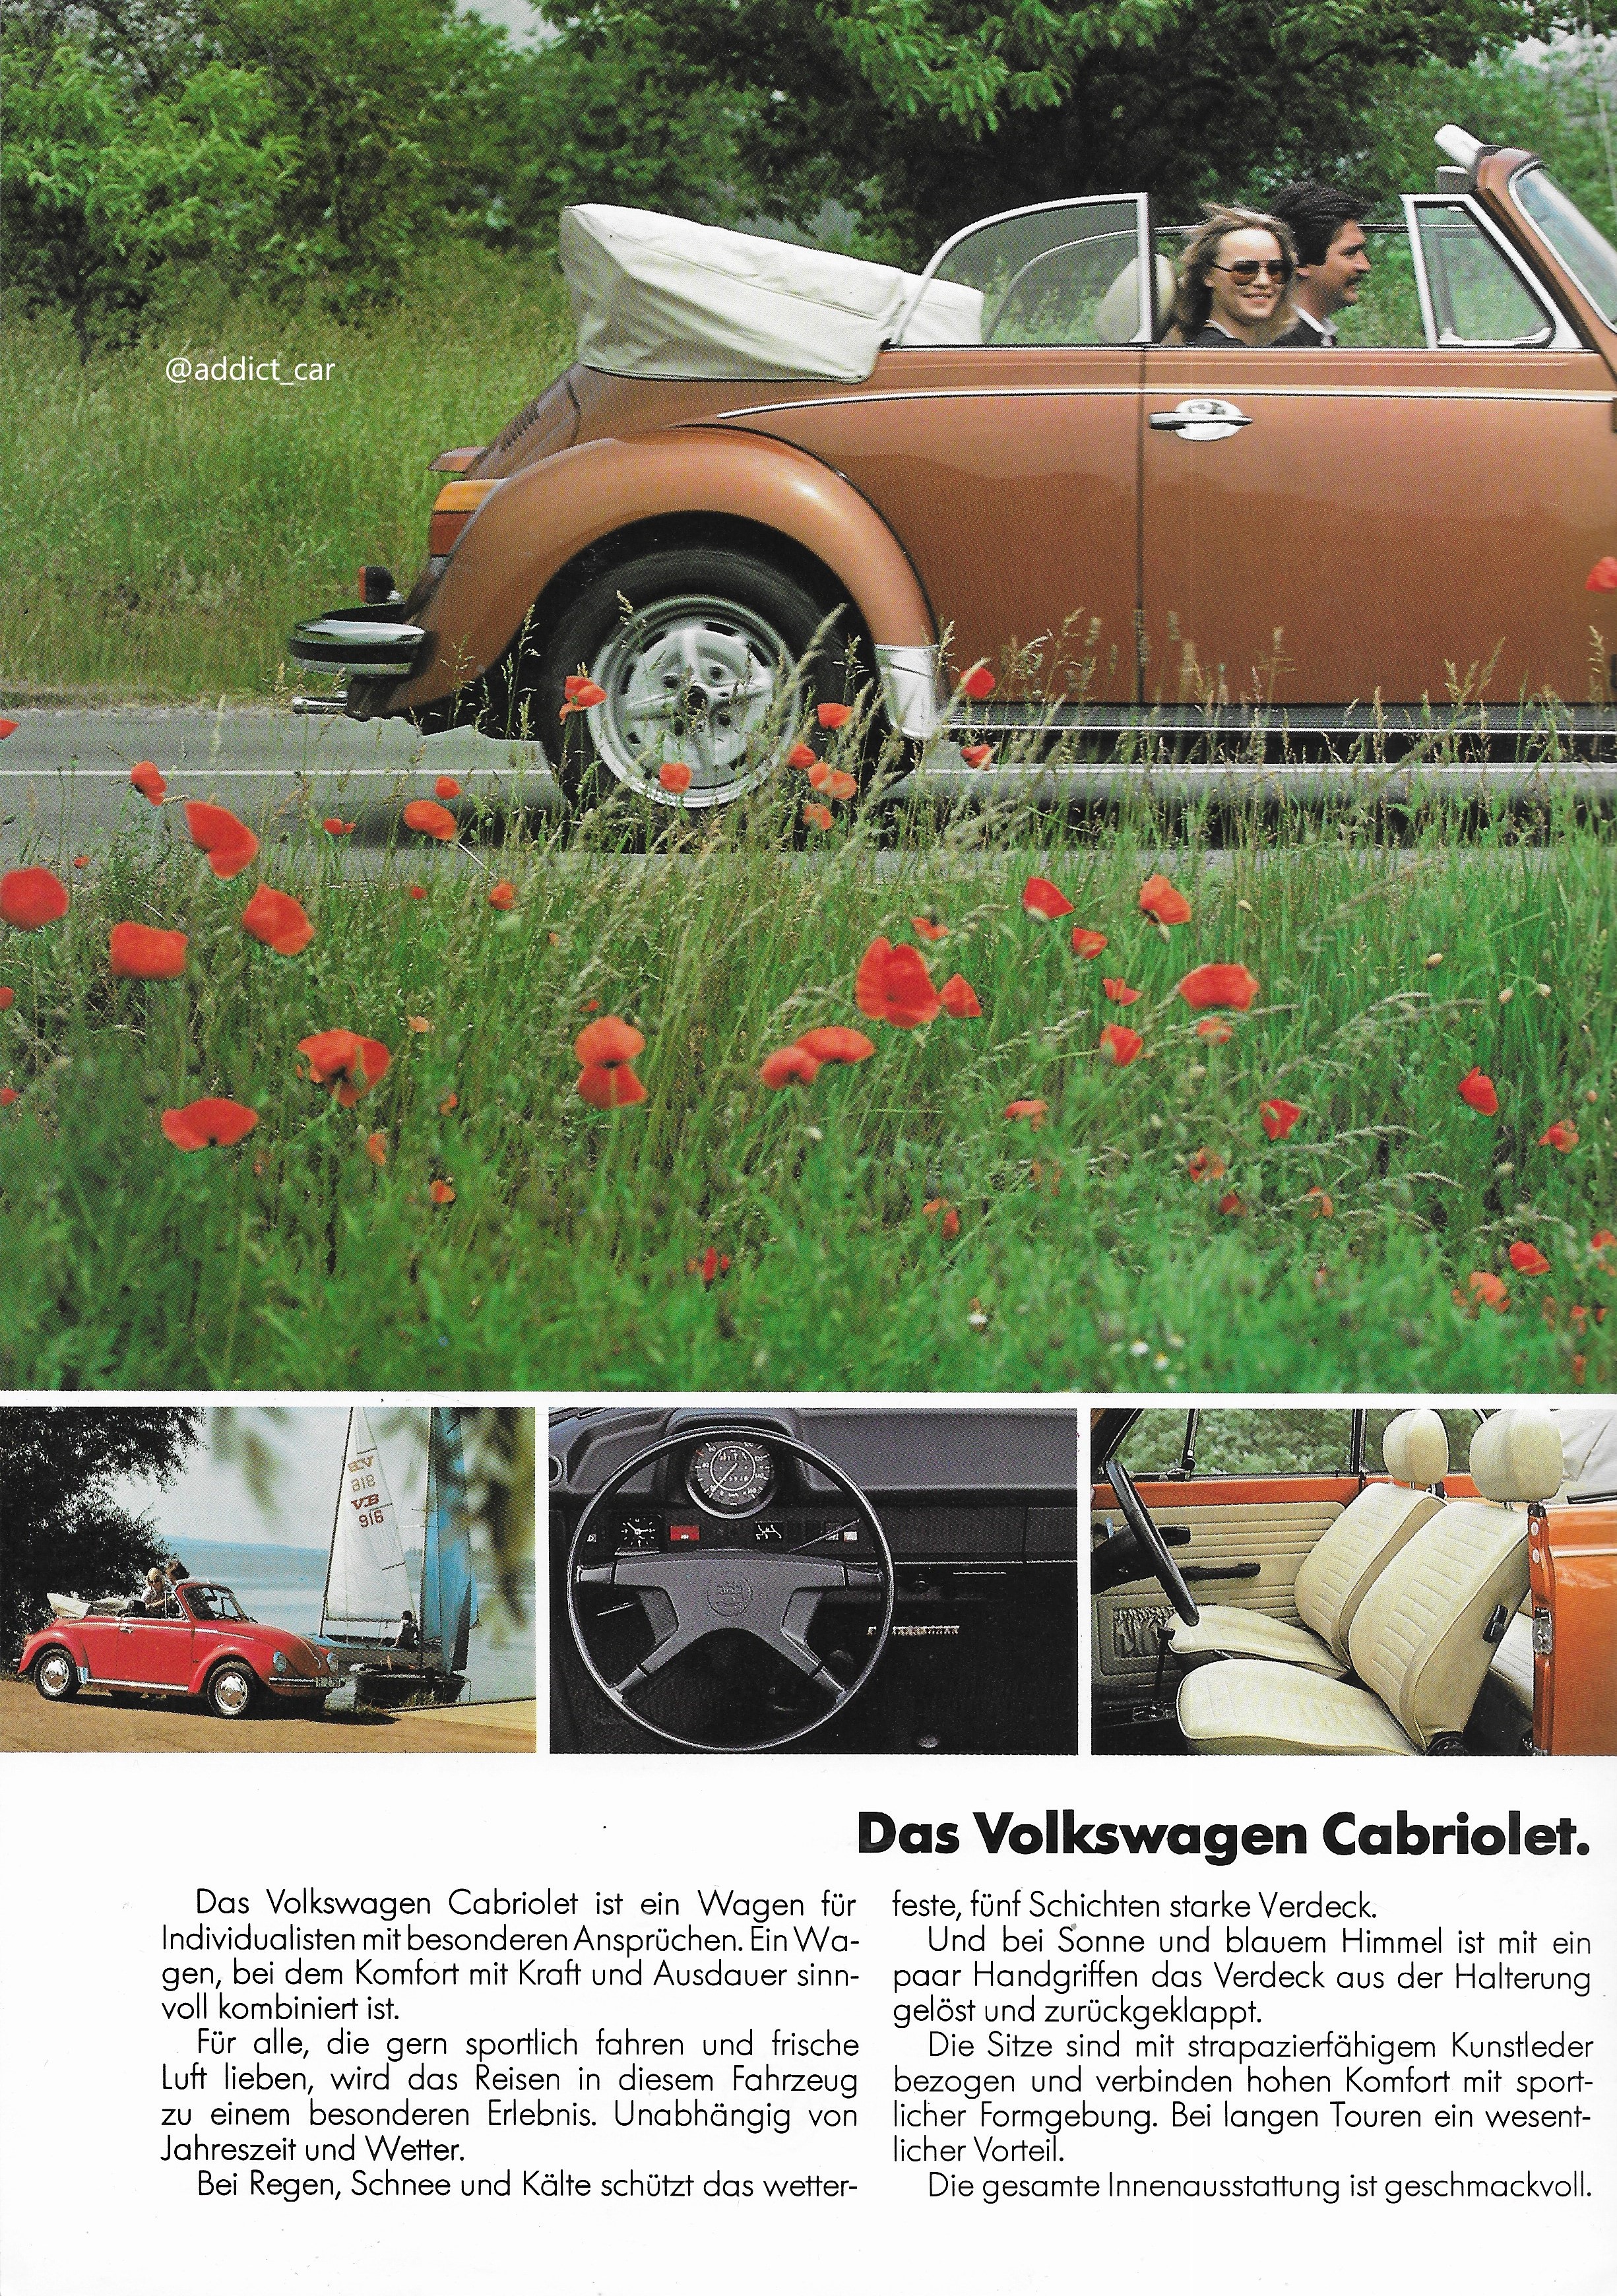 Car Brochure Addict on X: European production of the Volkswagen